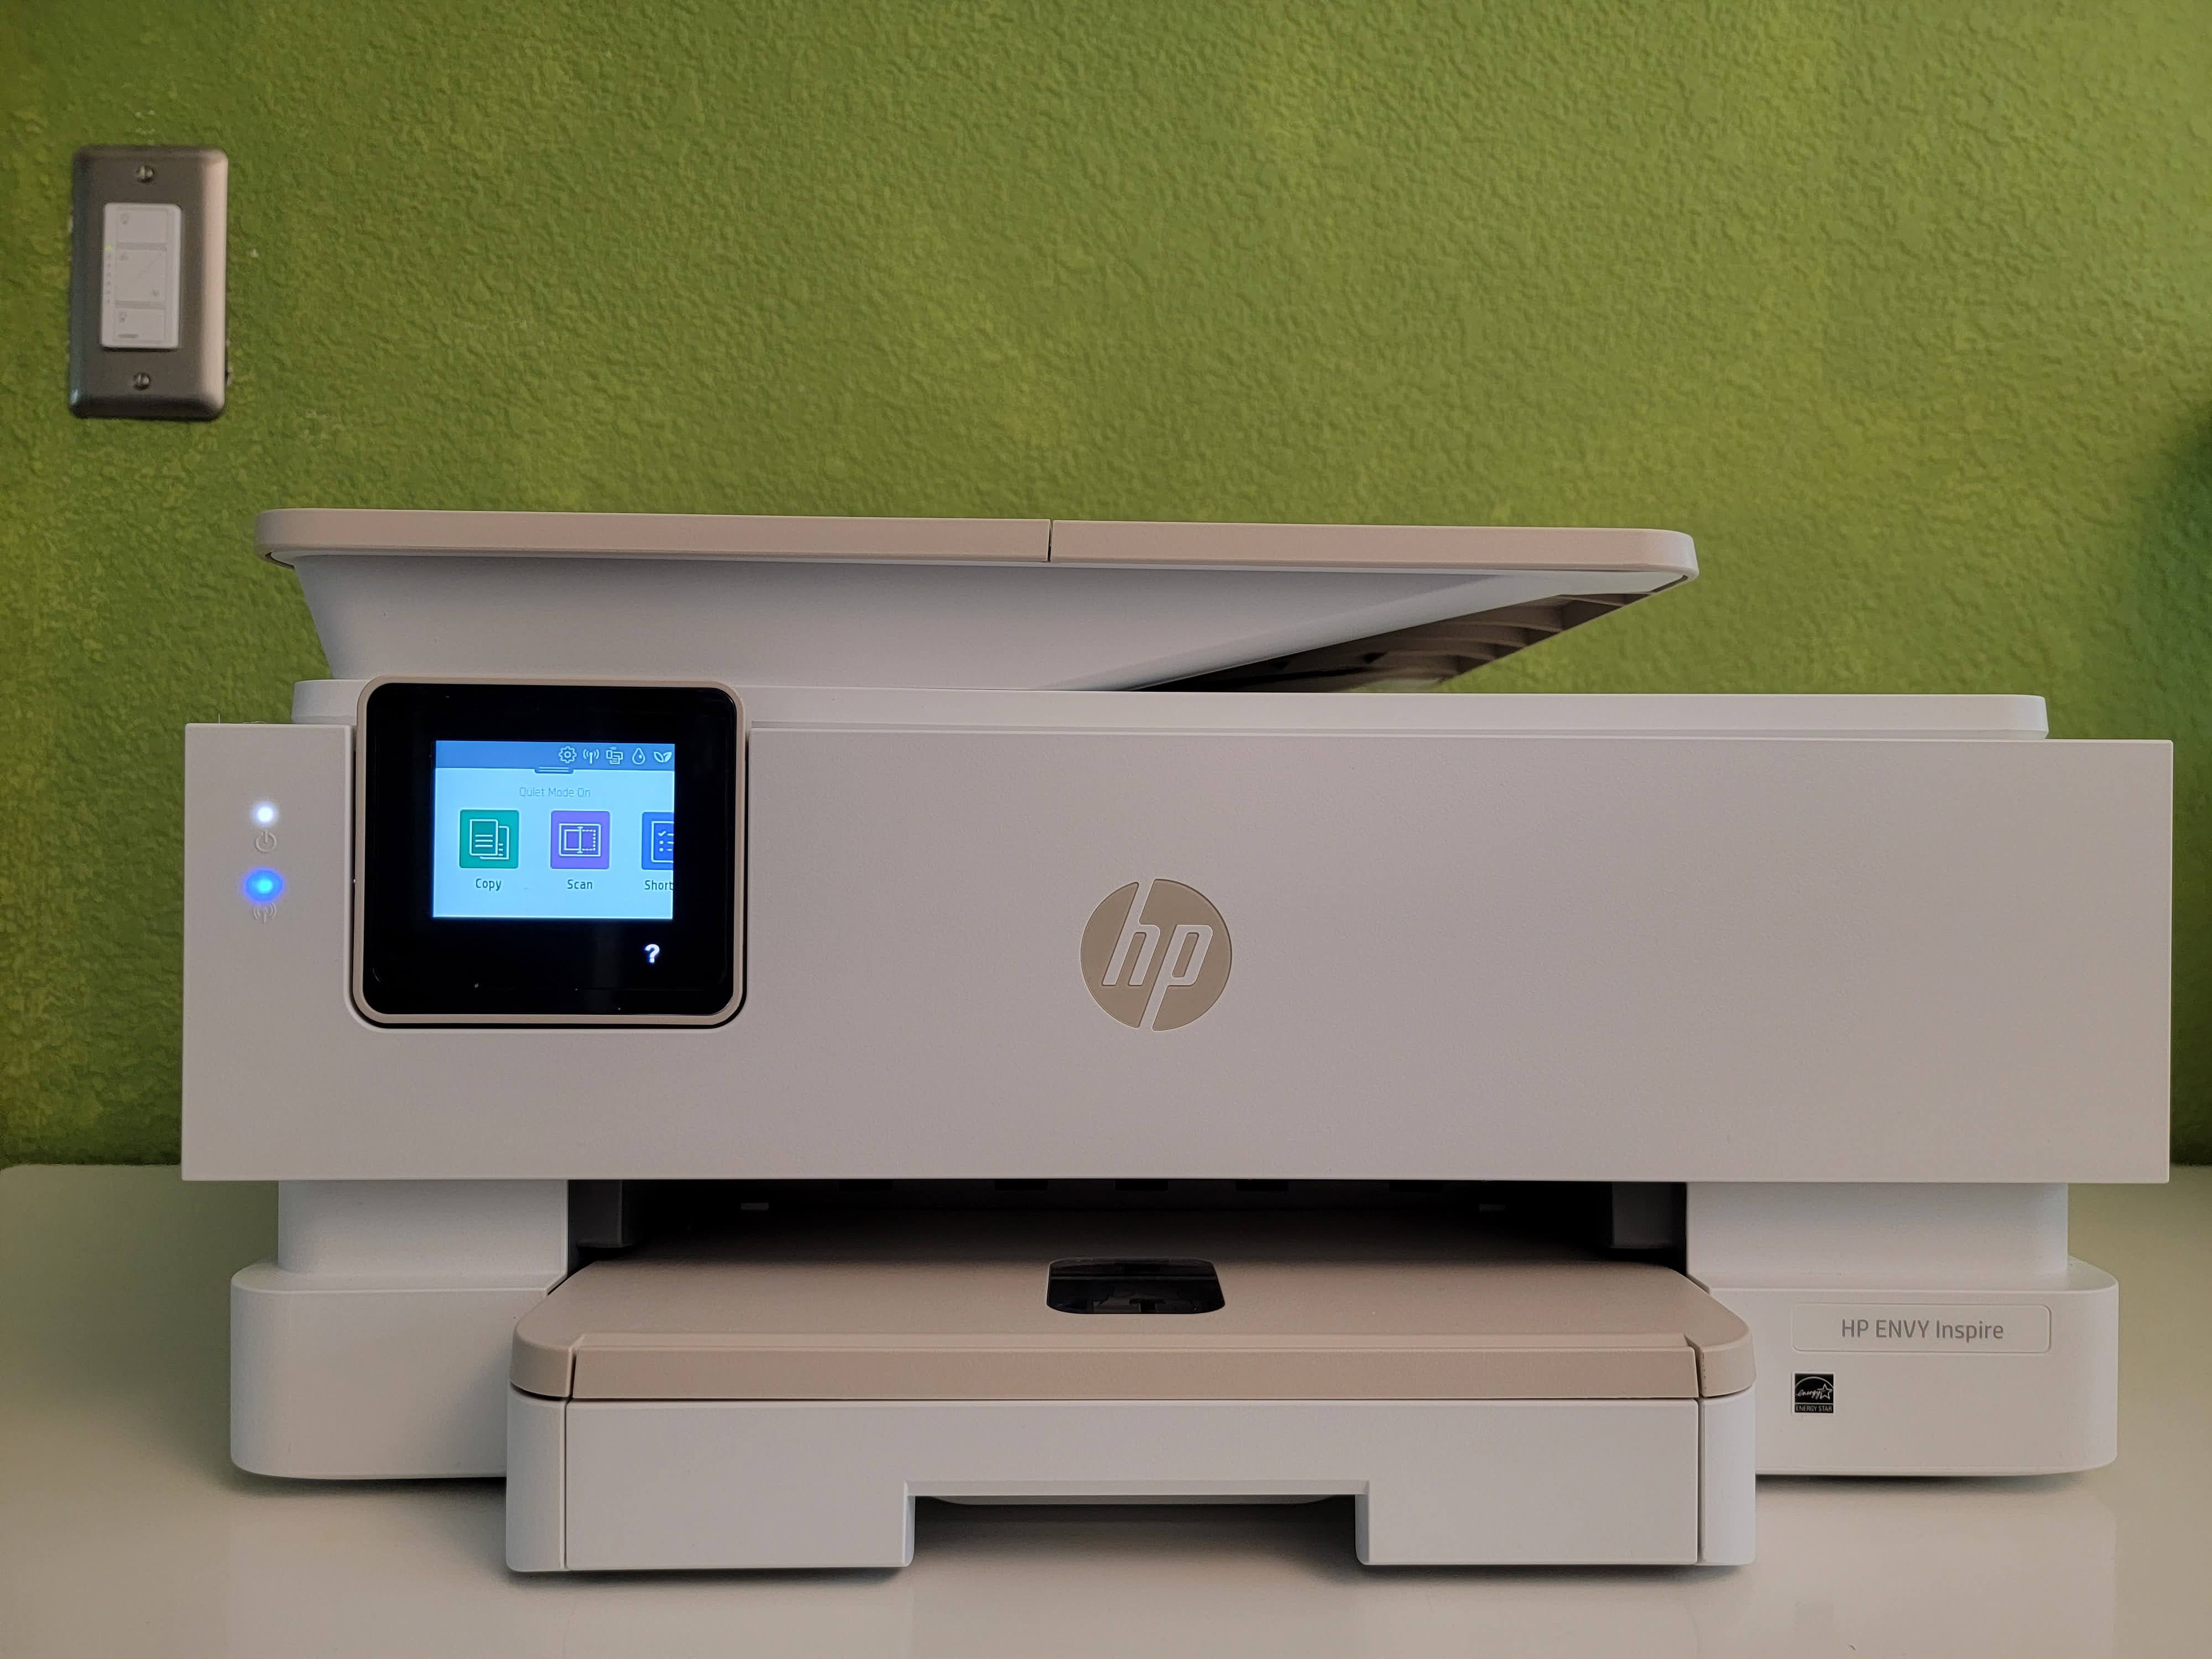 Best printer paper for laser and inkjet printers 2022